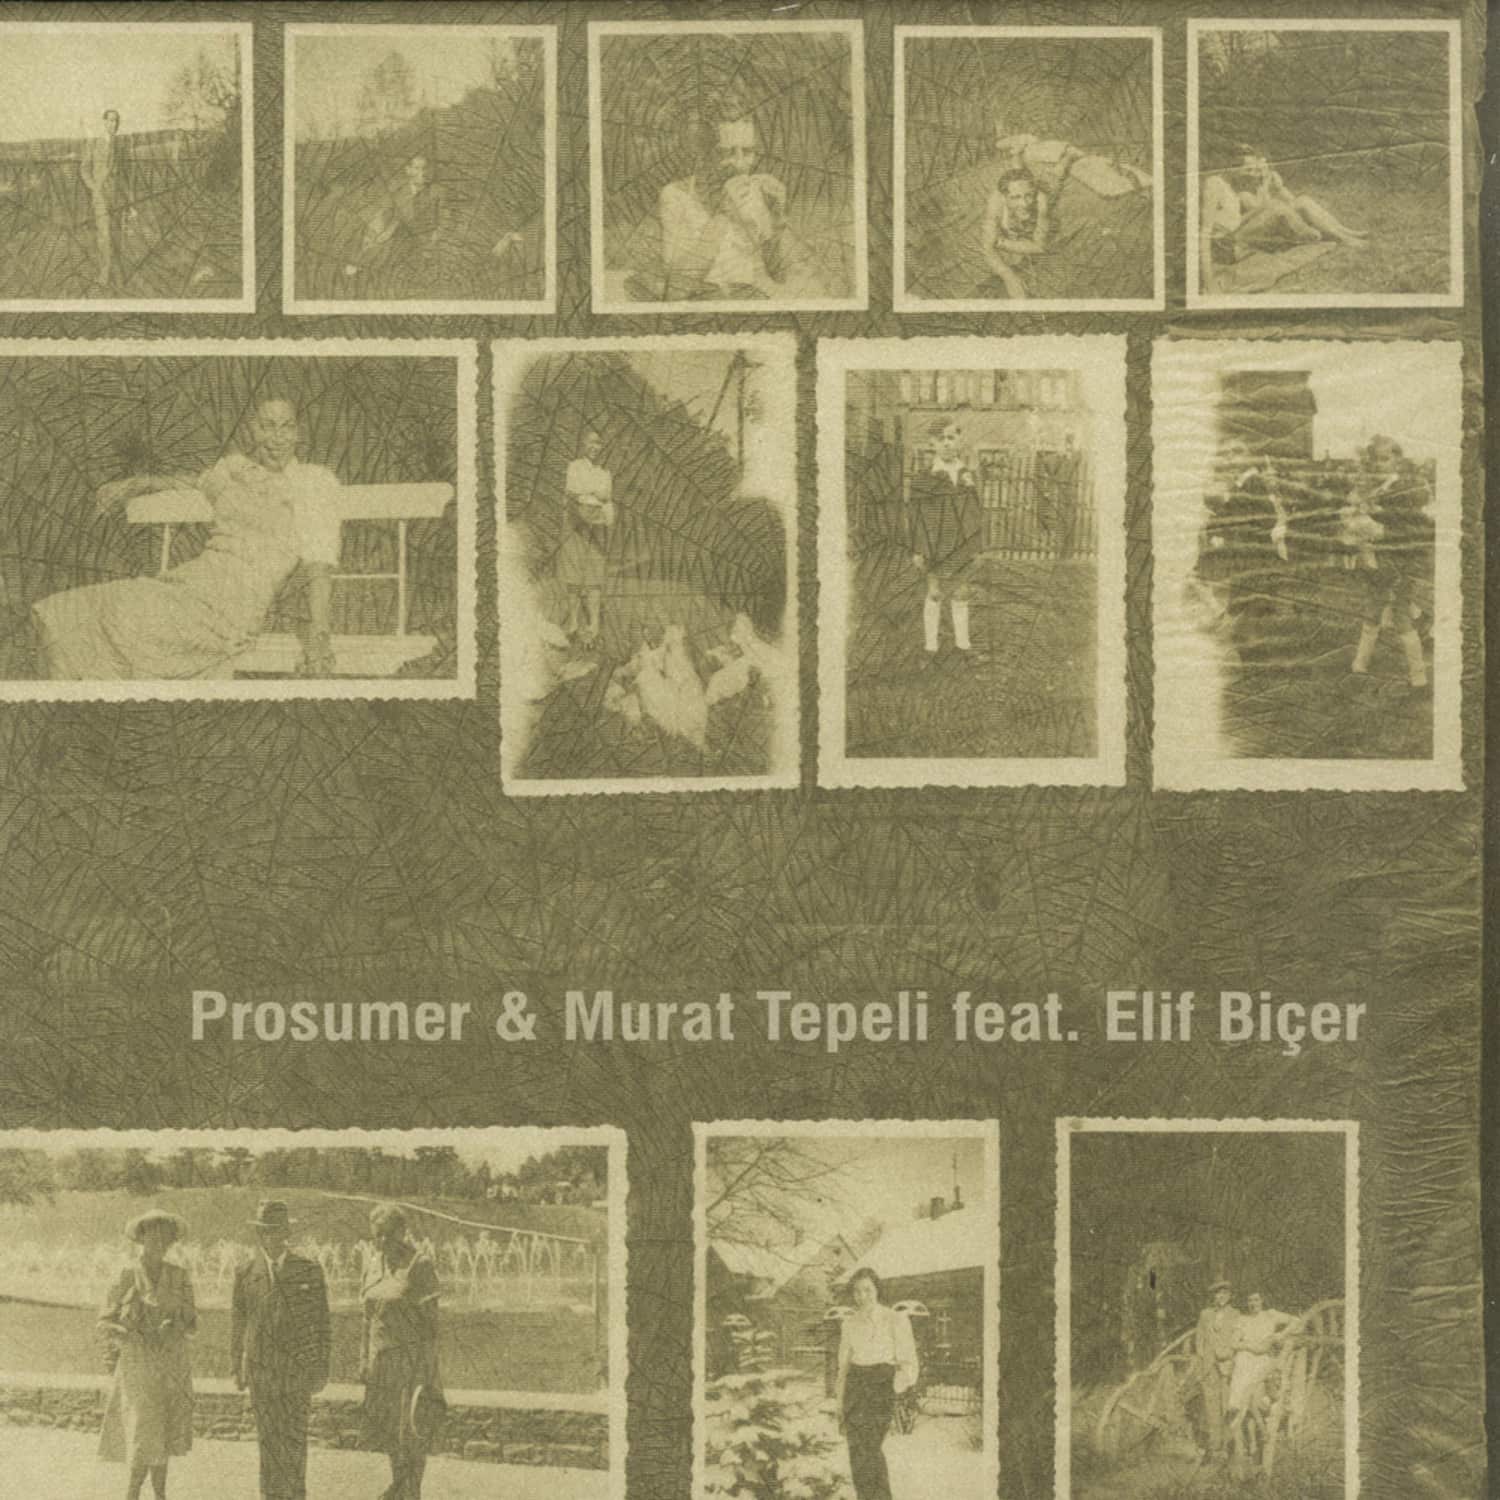 Prosumer & Murat Tepeli feat. Elif Bicer - TURN AROUND / CASSY RMX